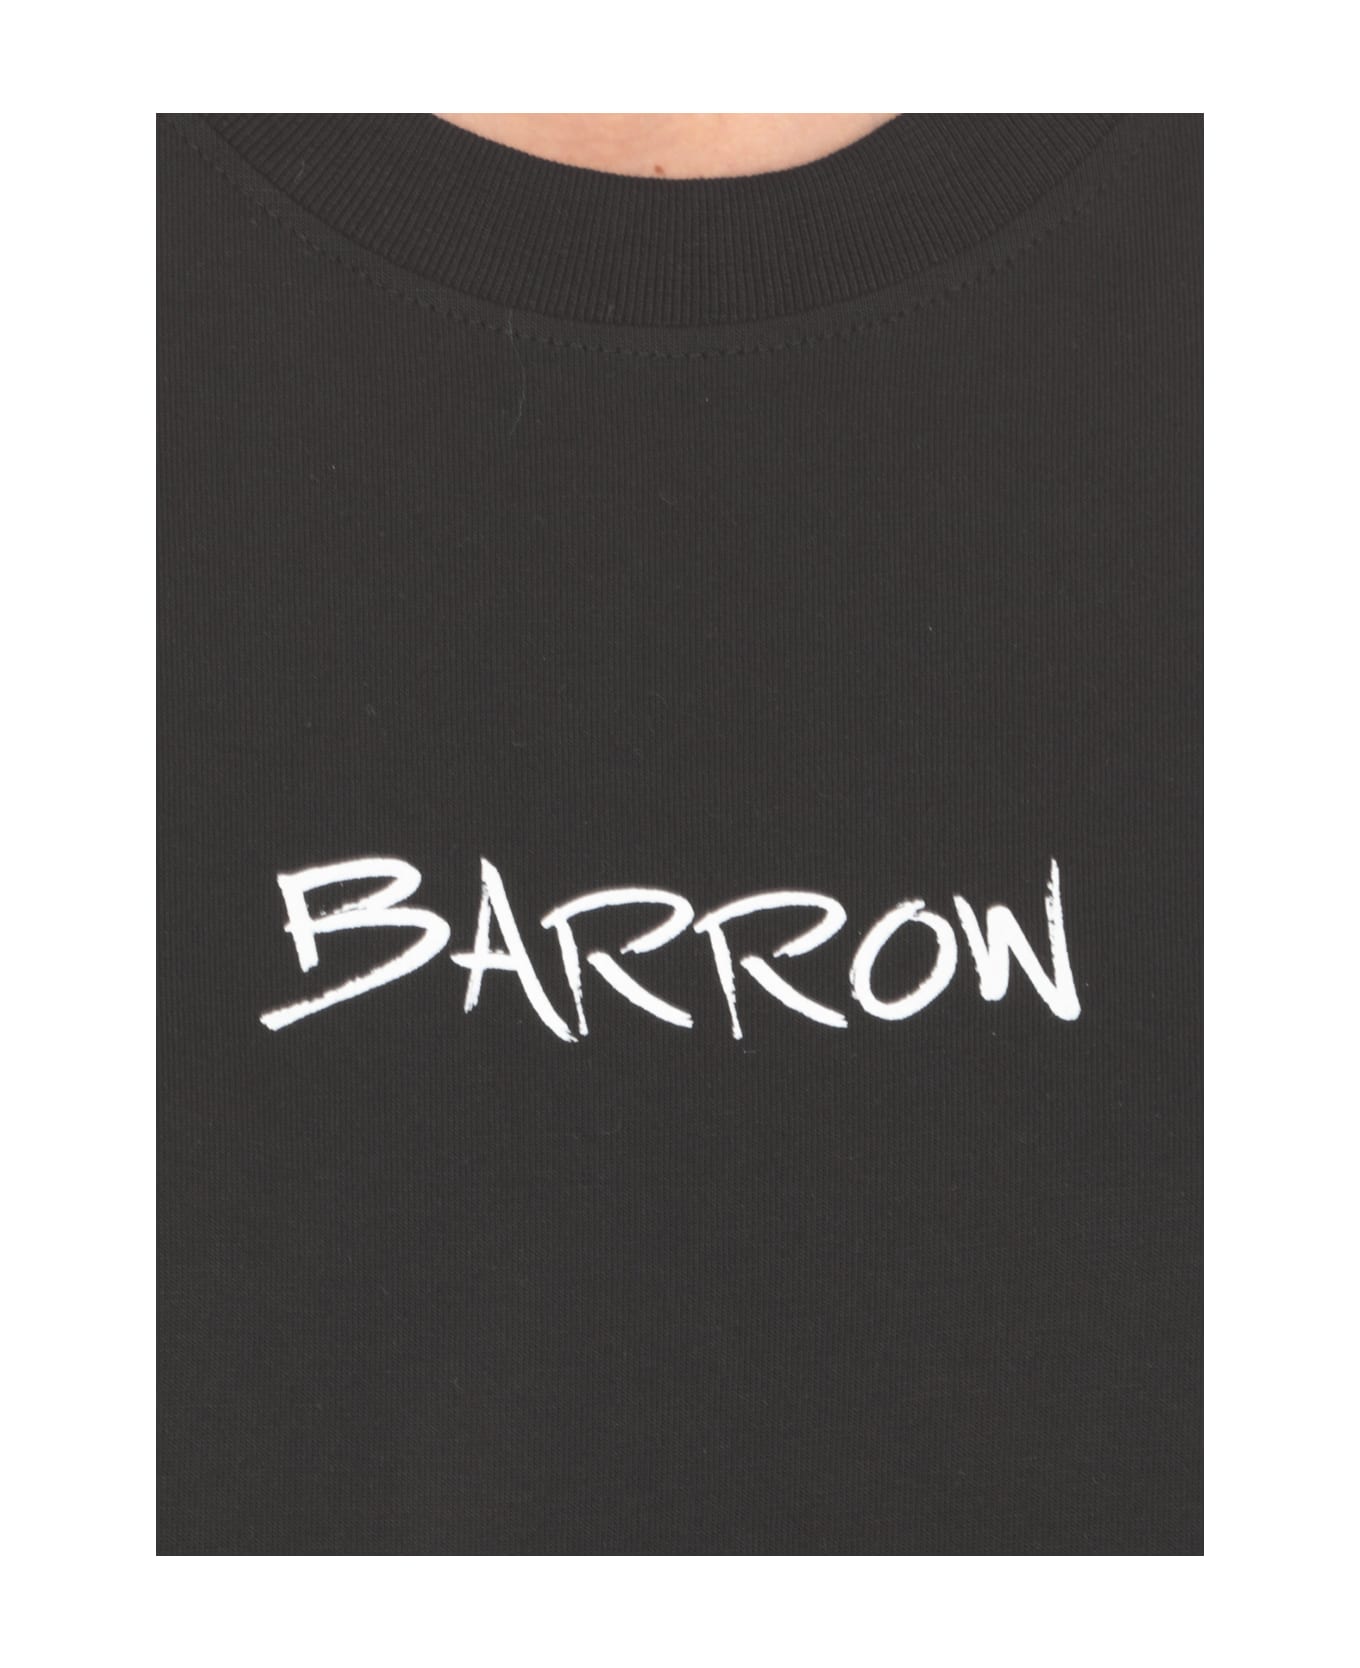 Barrow Logoed T-shirt - Black